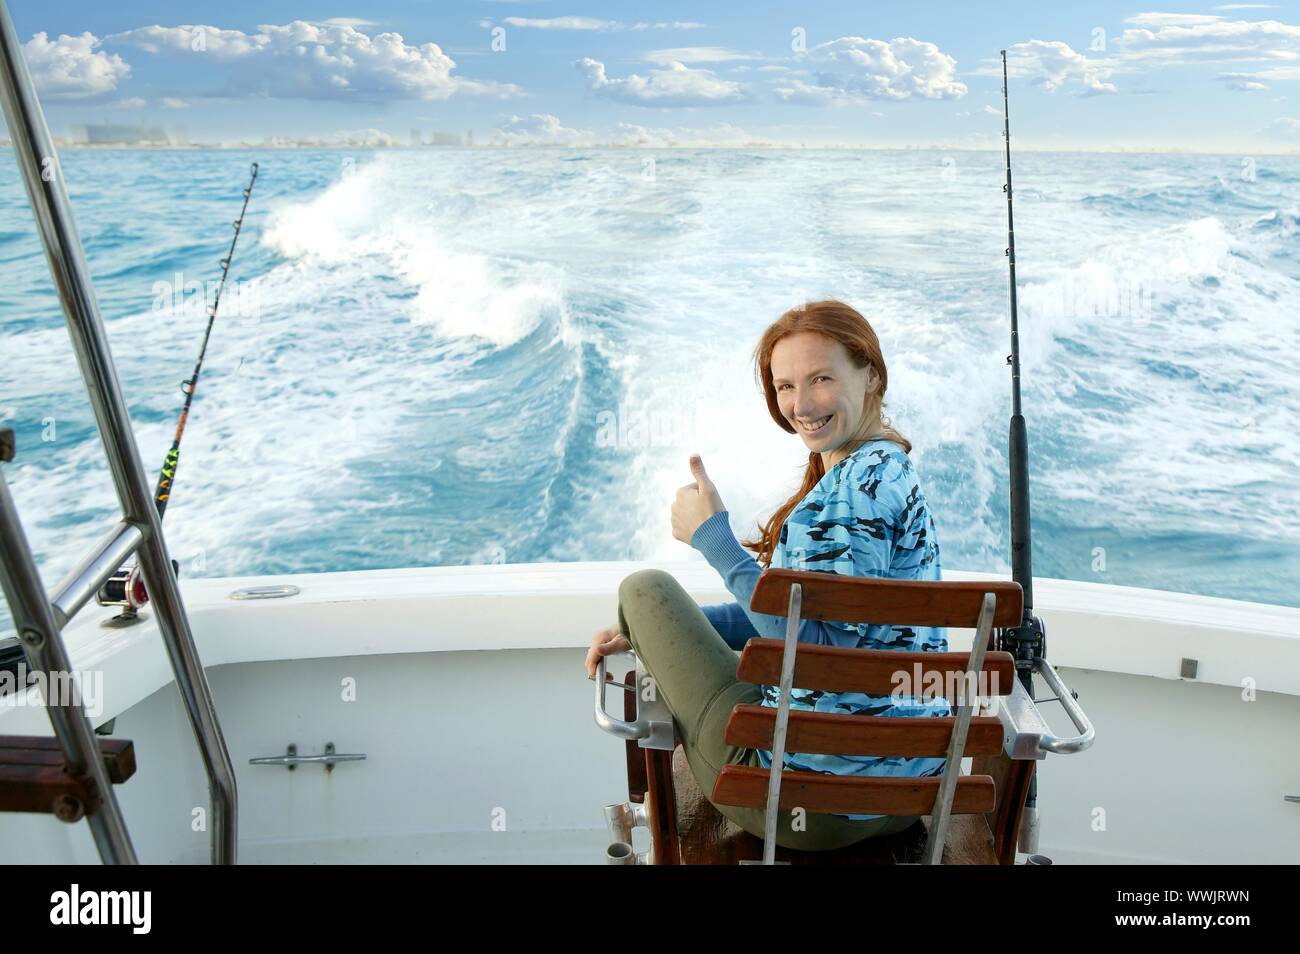 fisherwoman big game on boat chair ok sign happy Stock Photo